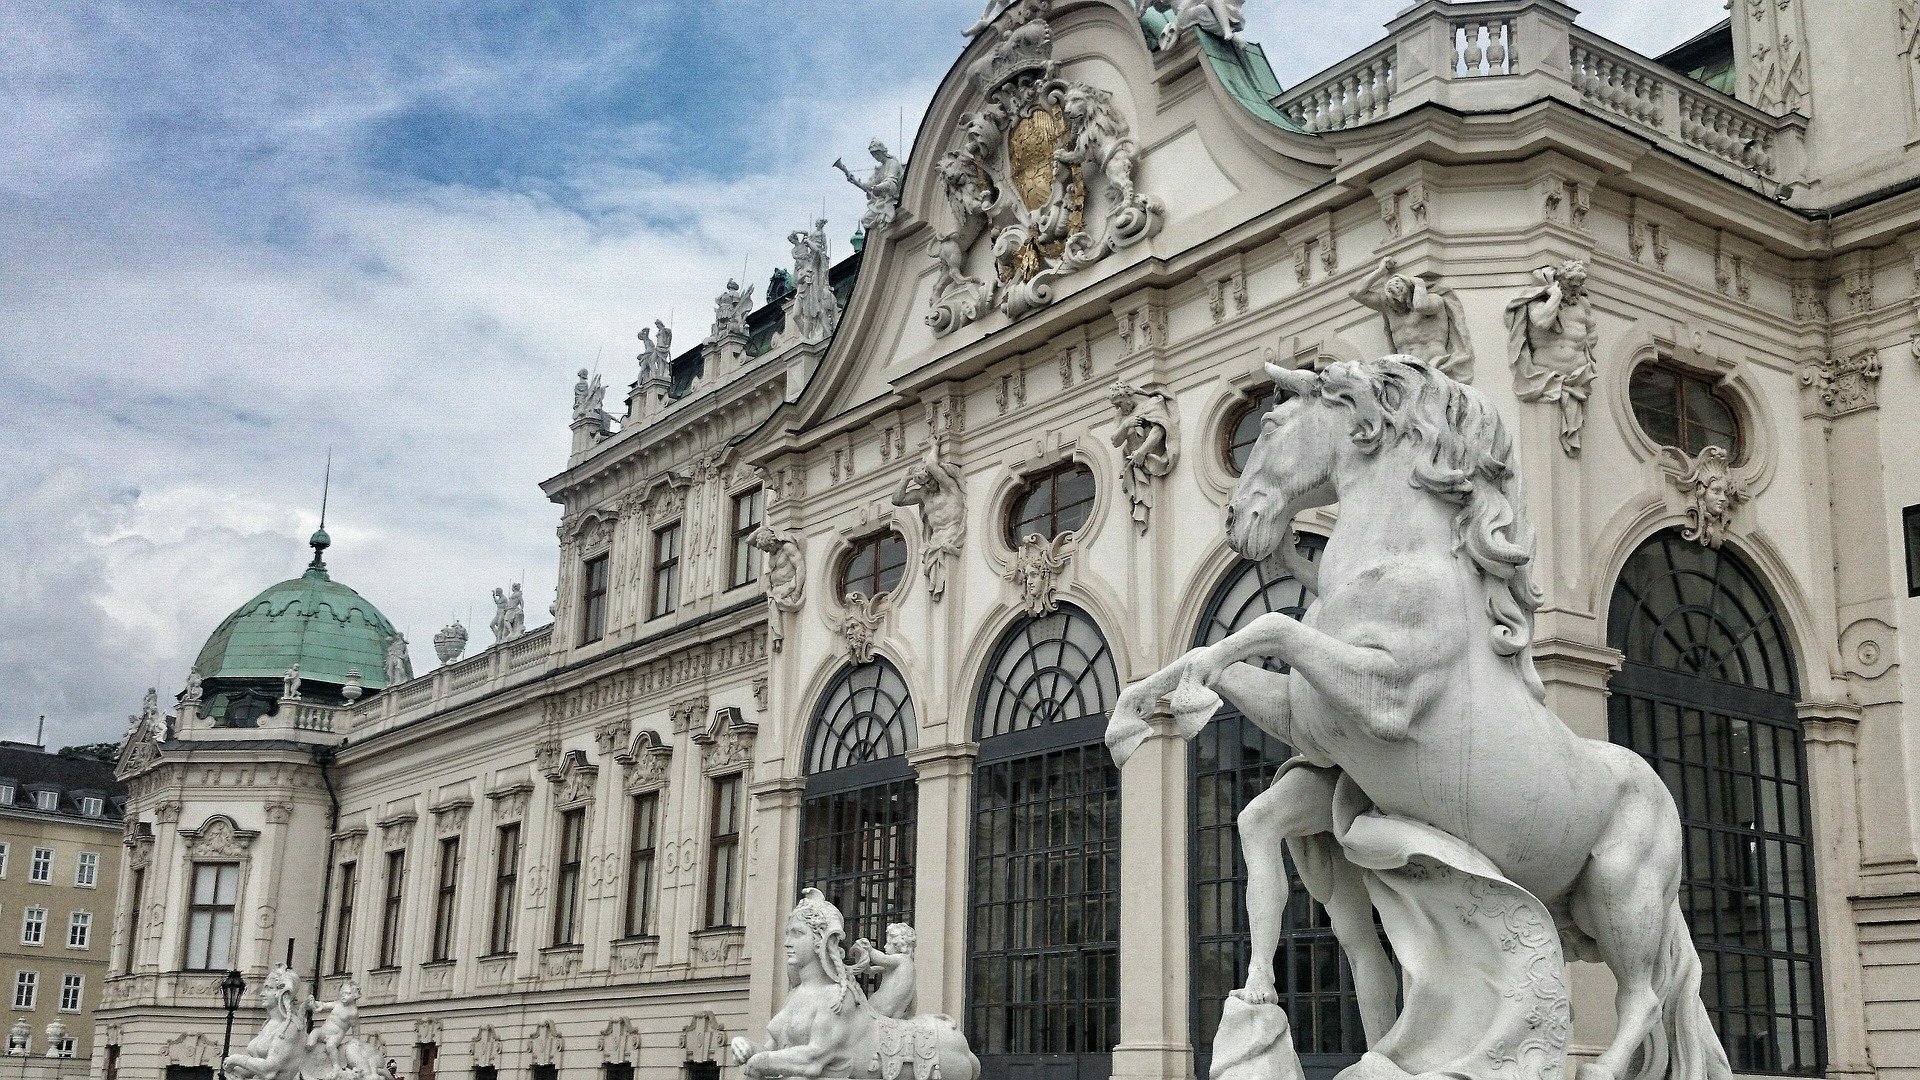 Palace of Vienna in Austria